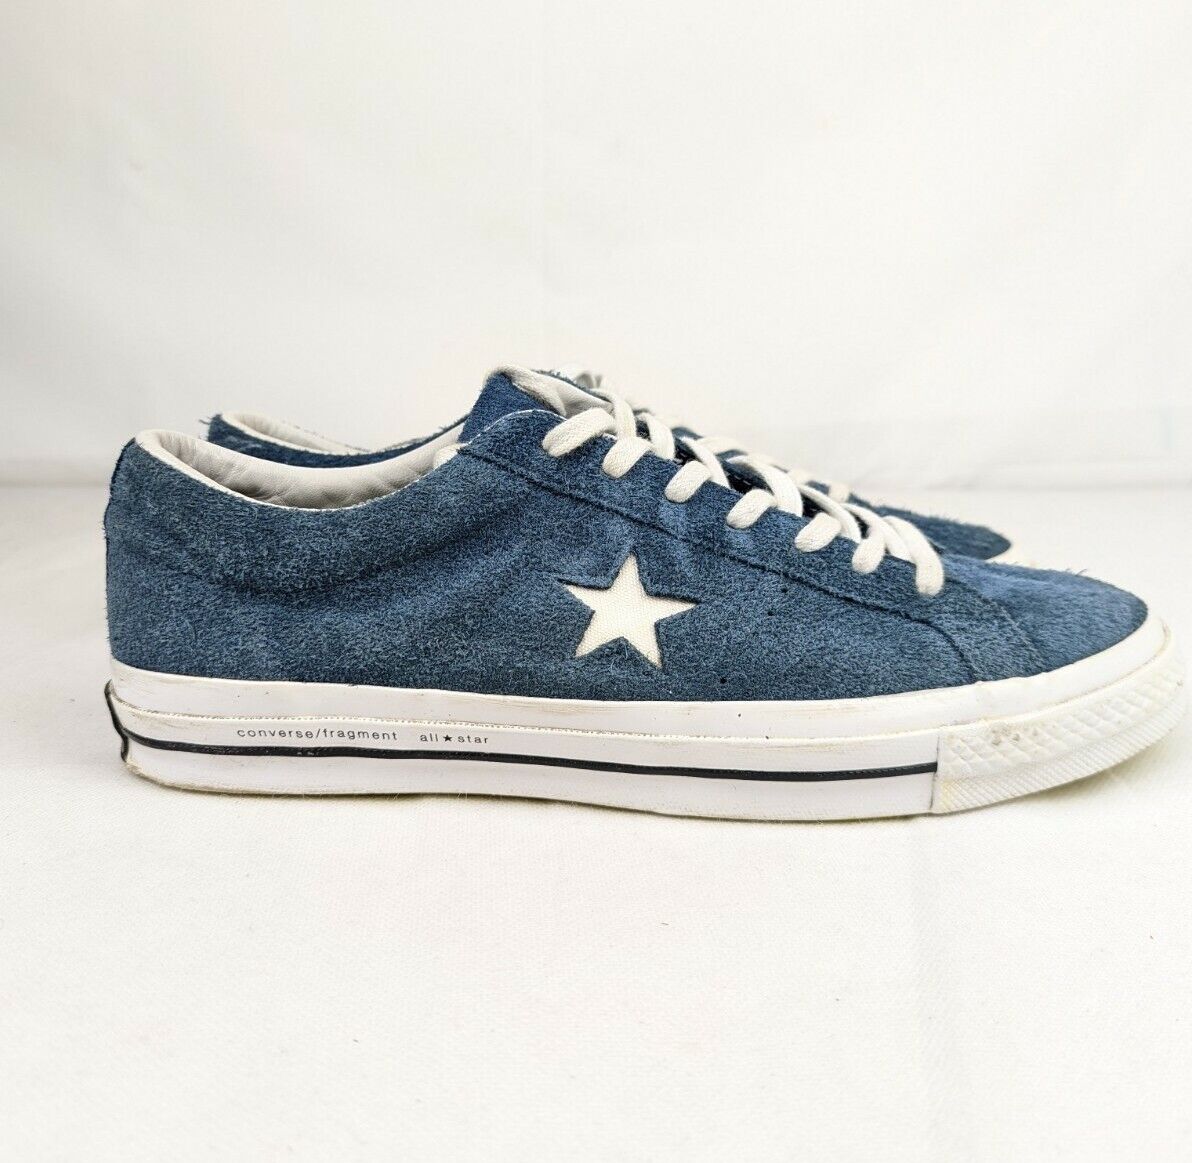 Rare Converse One Star x Fragment Sneakers - UK EU | eBay